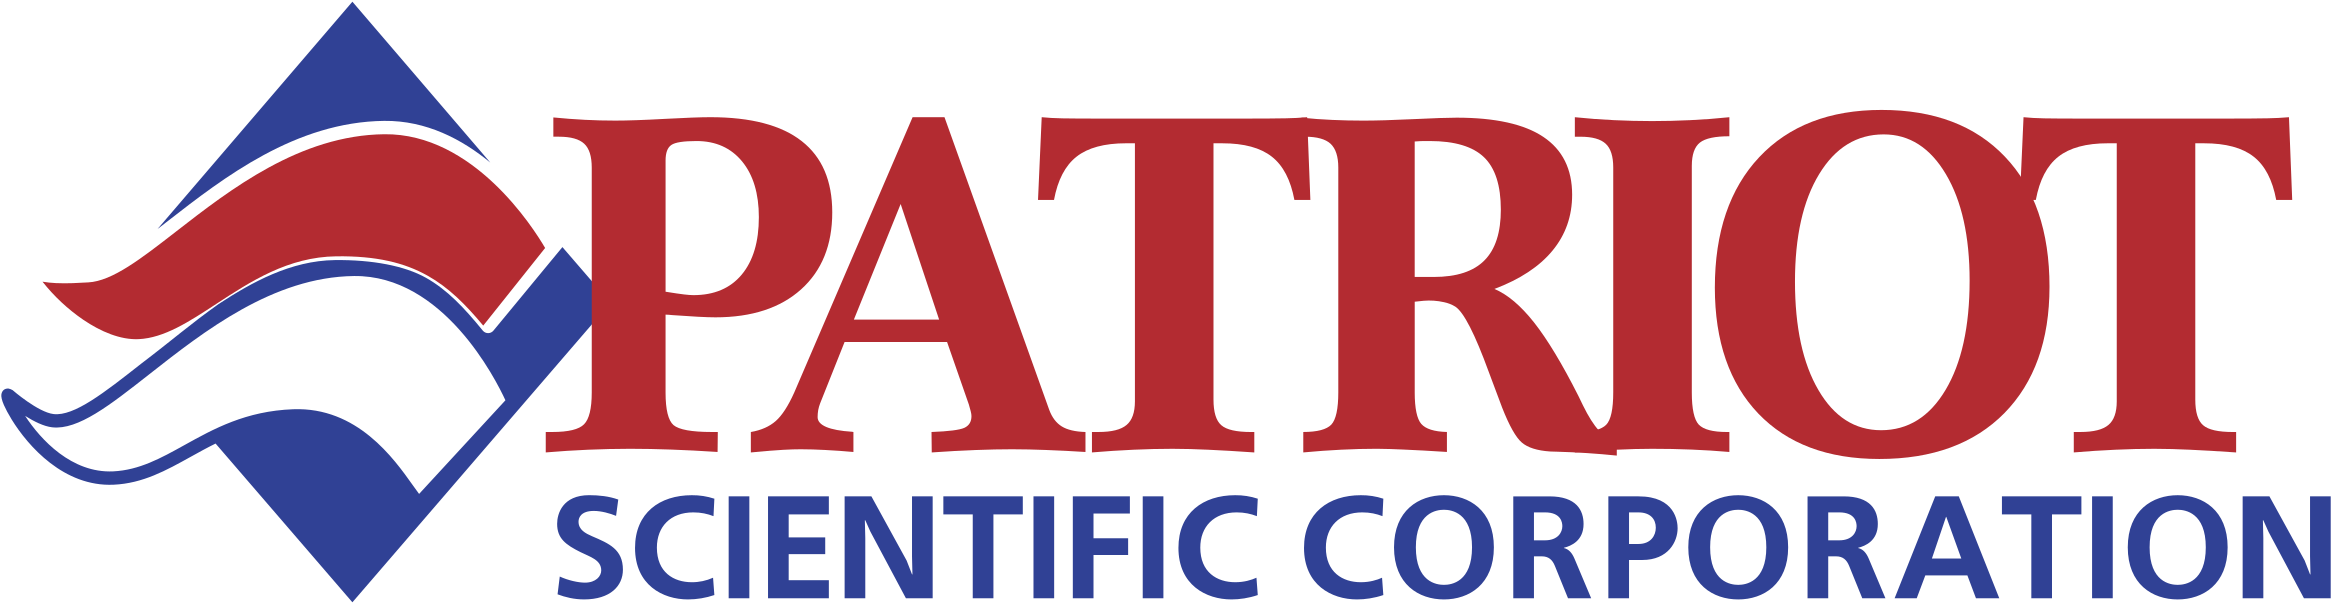 Patriot Scientific Corporation Logo PNG